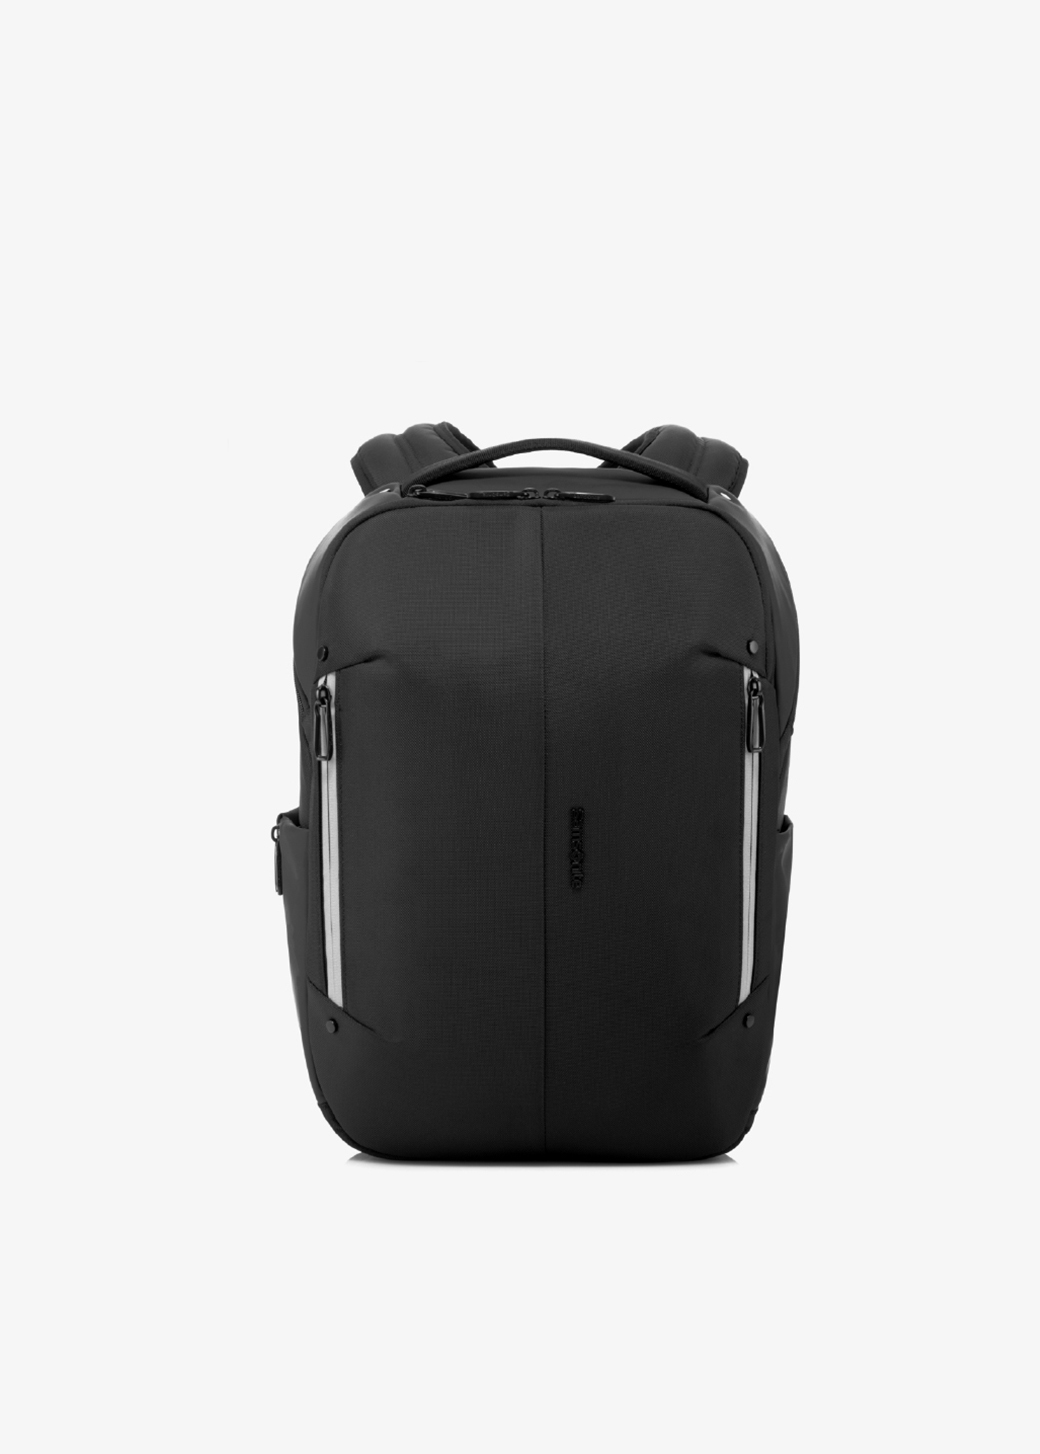 Una mochila inteligente: Google Jacquard